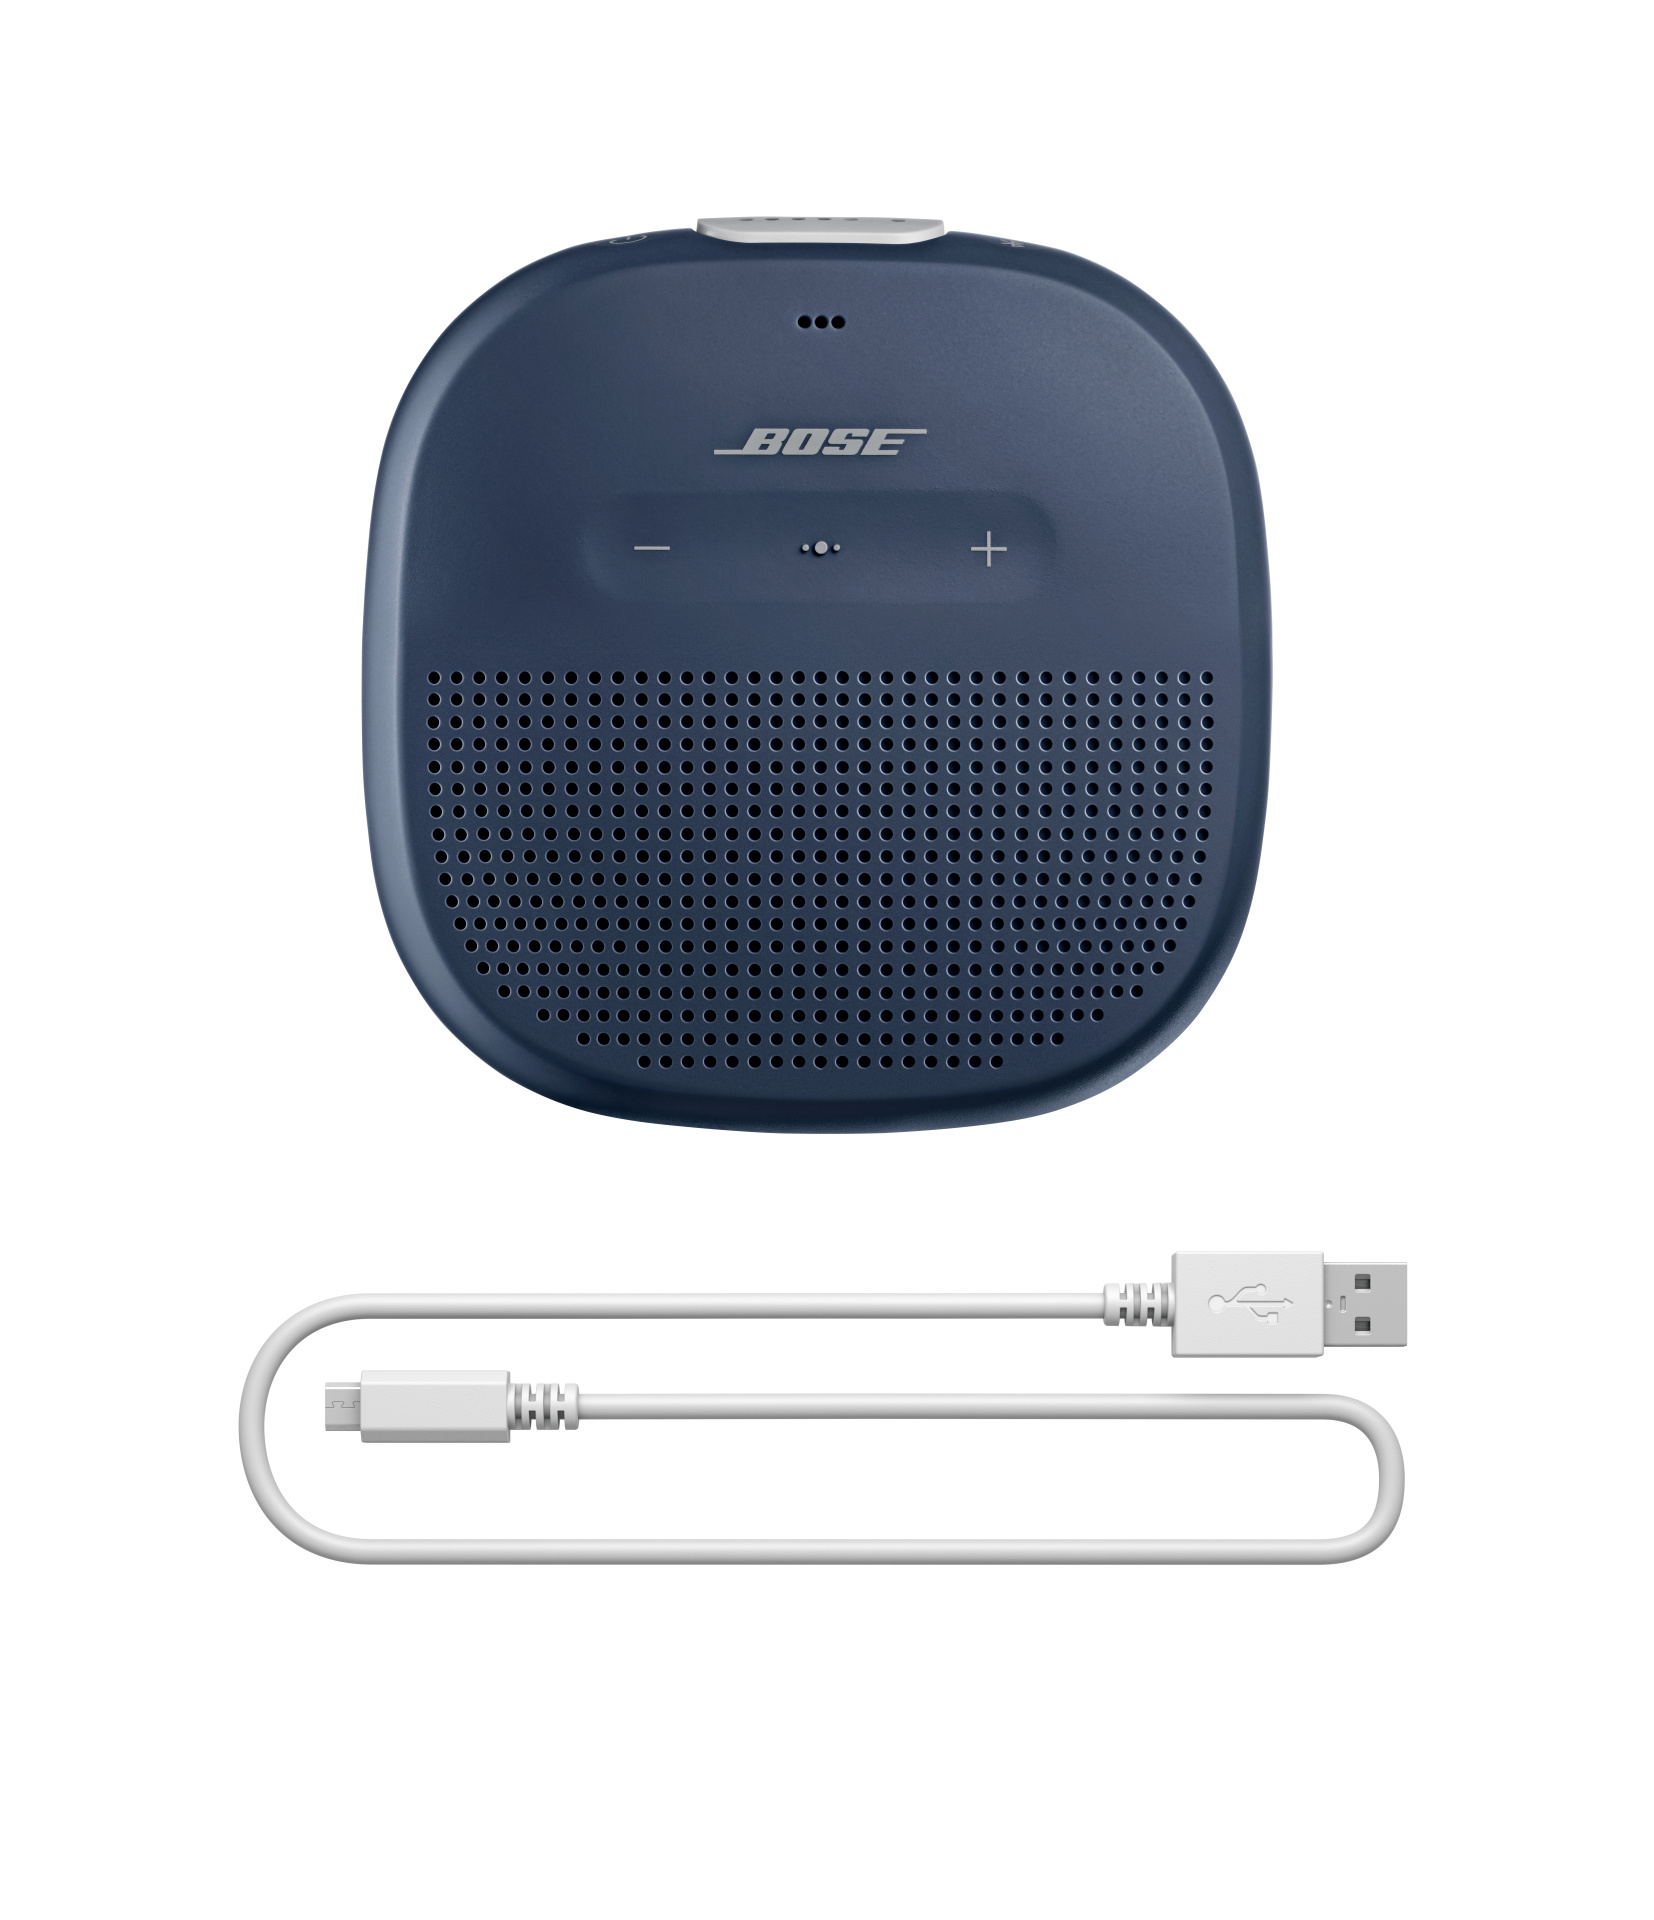 Bose SoundLink Micro Waterproof Wireless Portable Bluetooth Speaker, Blue - image 4 of 6